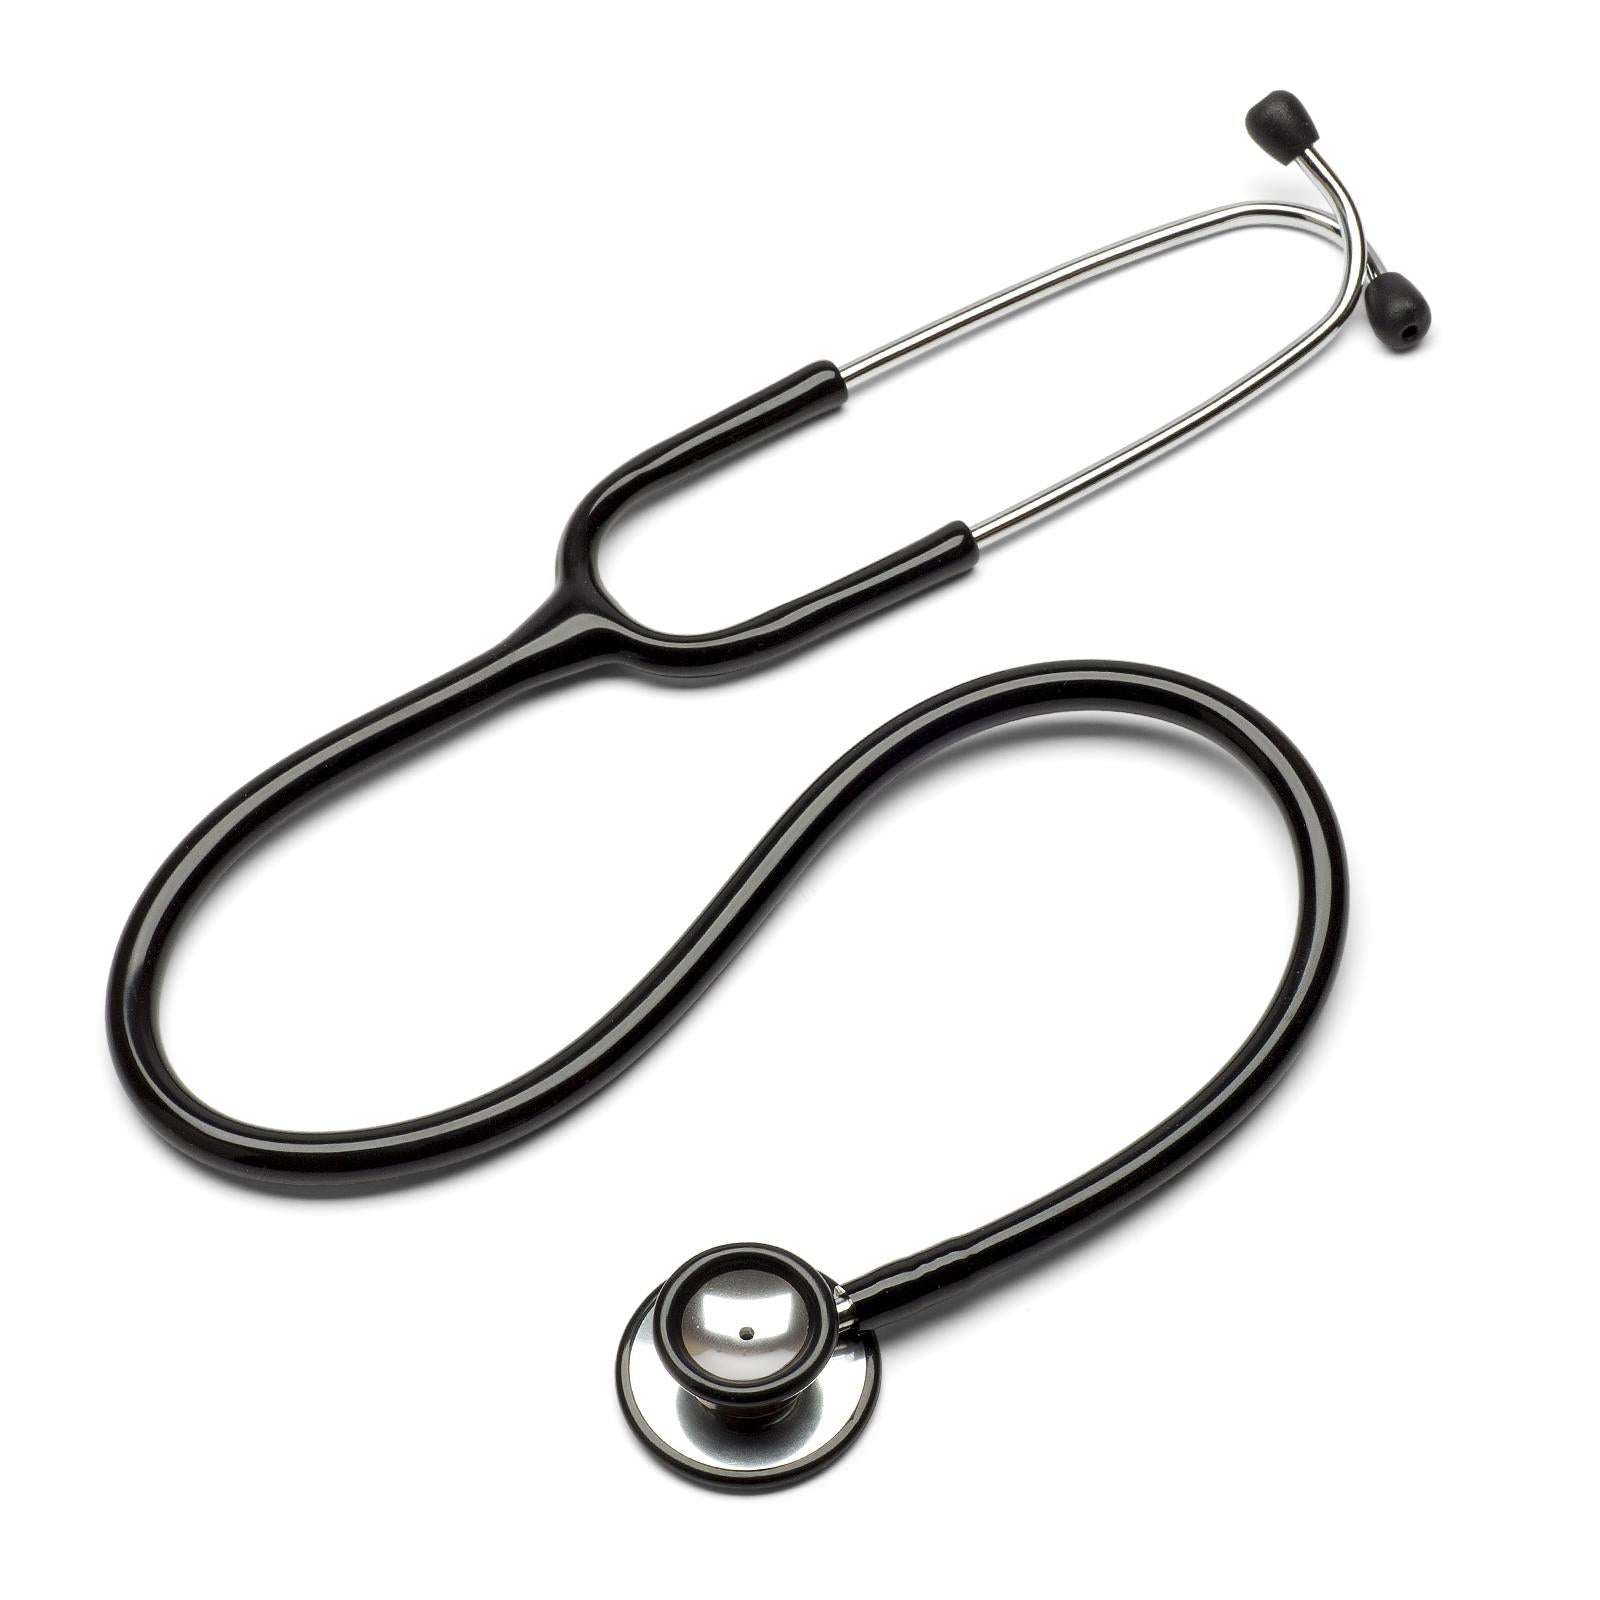 Merlin Medical Blue Dual Head Stethoscope – Medical Supplies